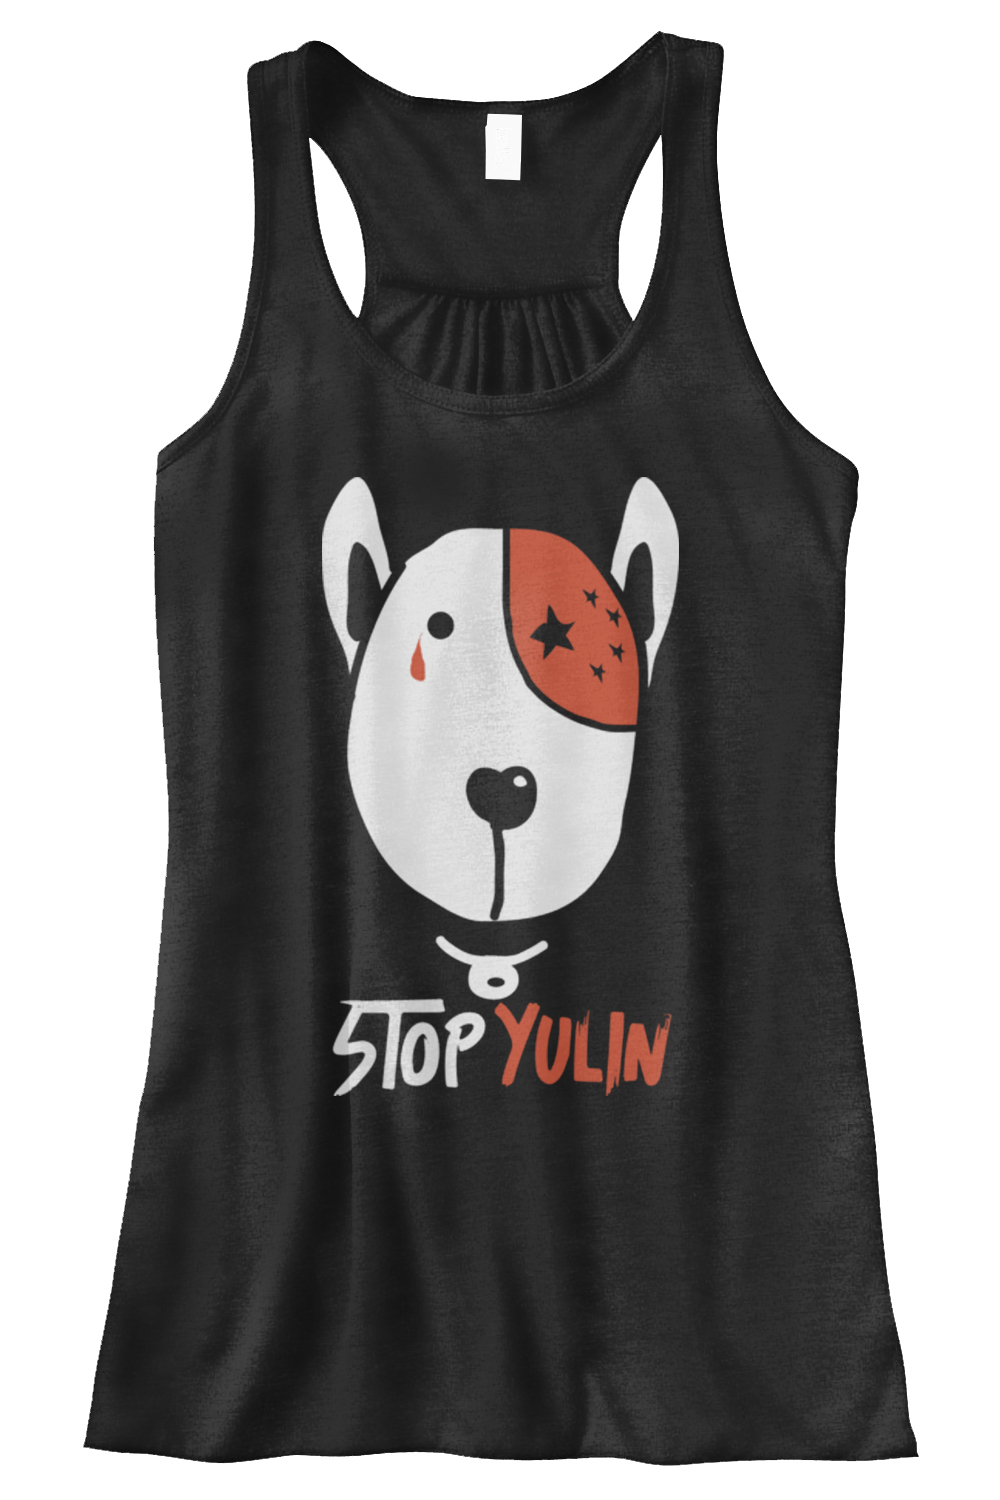 Stop Yulin Eye Flag Bella Fashion Tank